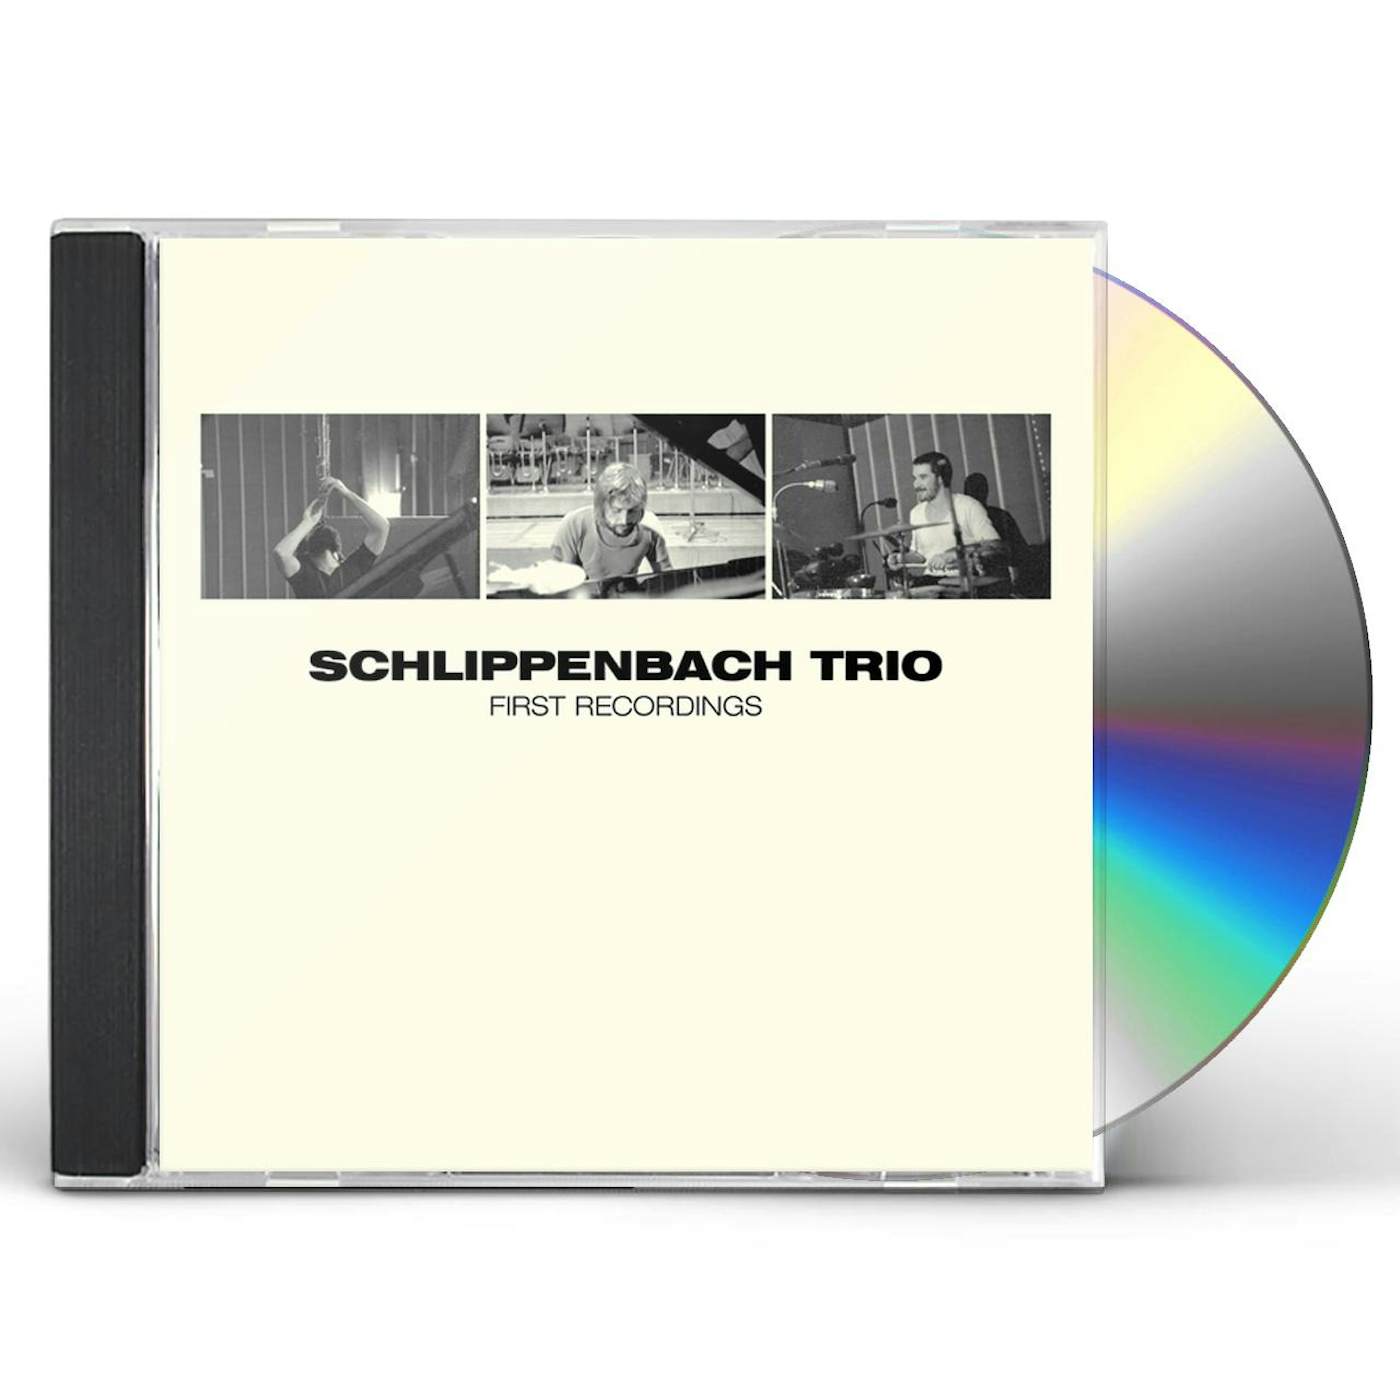 Schlippenbach Trio FIRST RECORDINGS CD